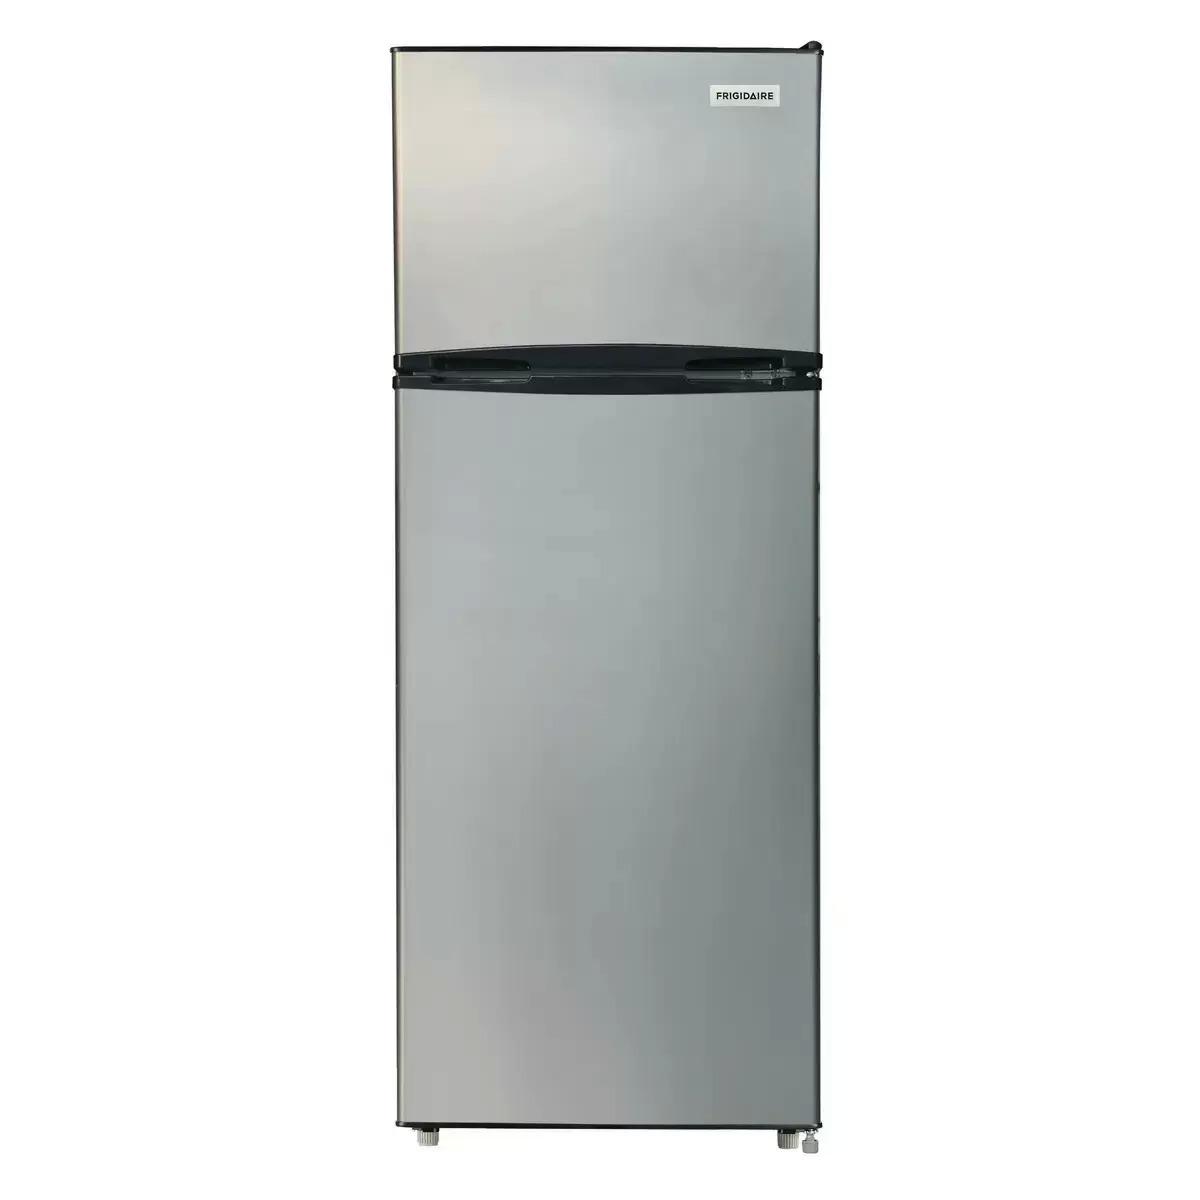 Frigidaire 7.5ft Refrigerator with Freezer for $198 Shipped